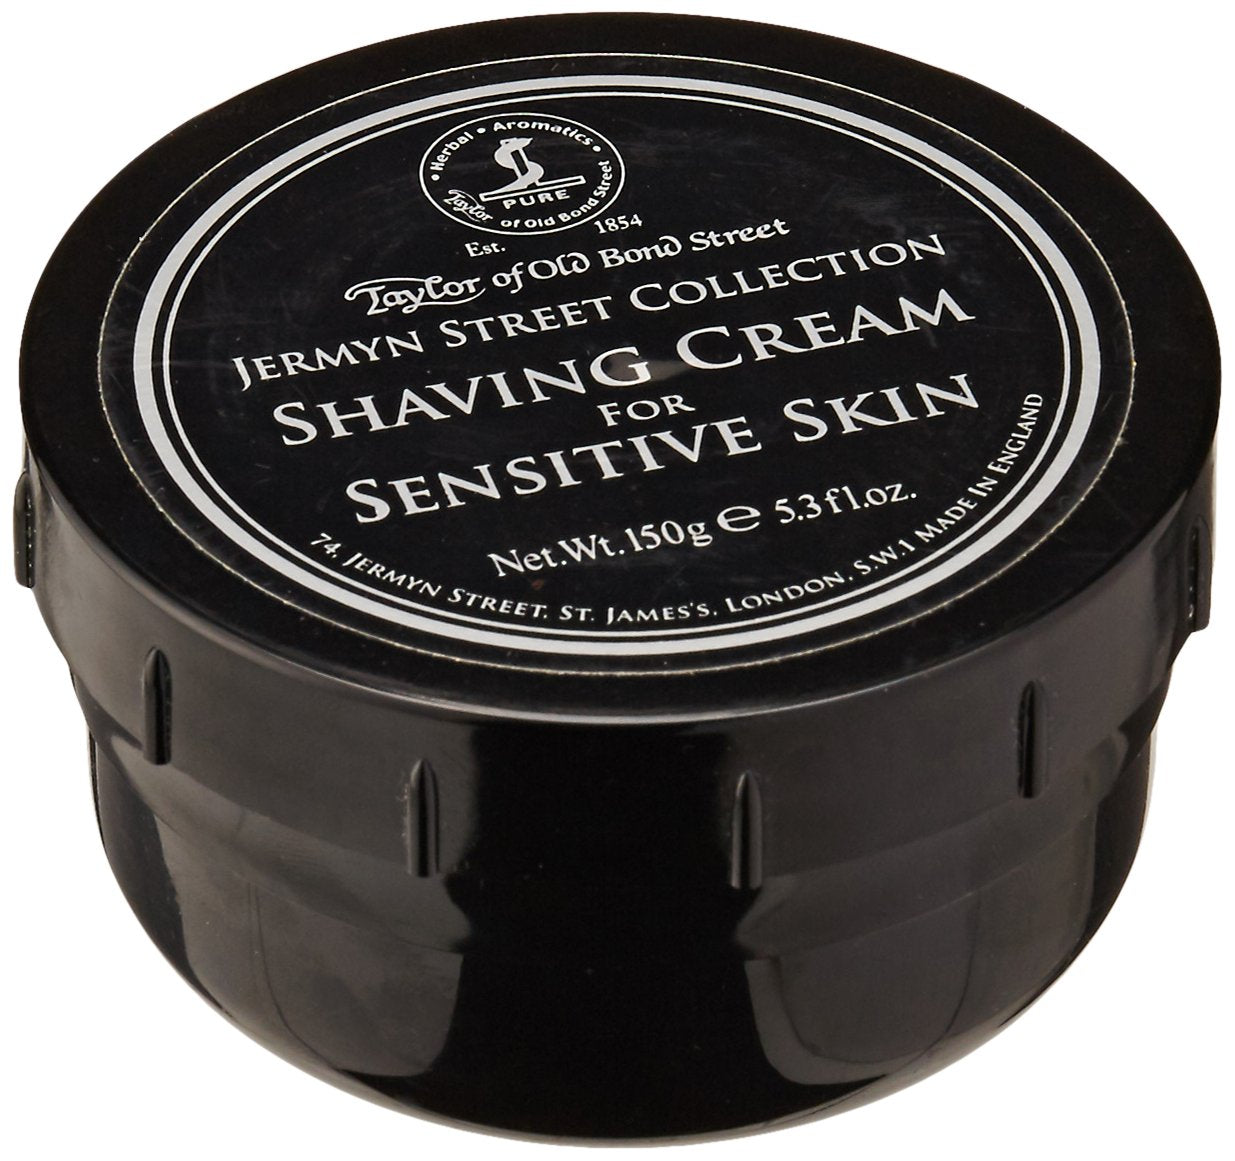 Taylors of Old Bond Street Jermyn Street Collection Shaving Cream for Sensitive Skin Screw Tread Pot 150gr